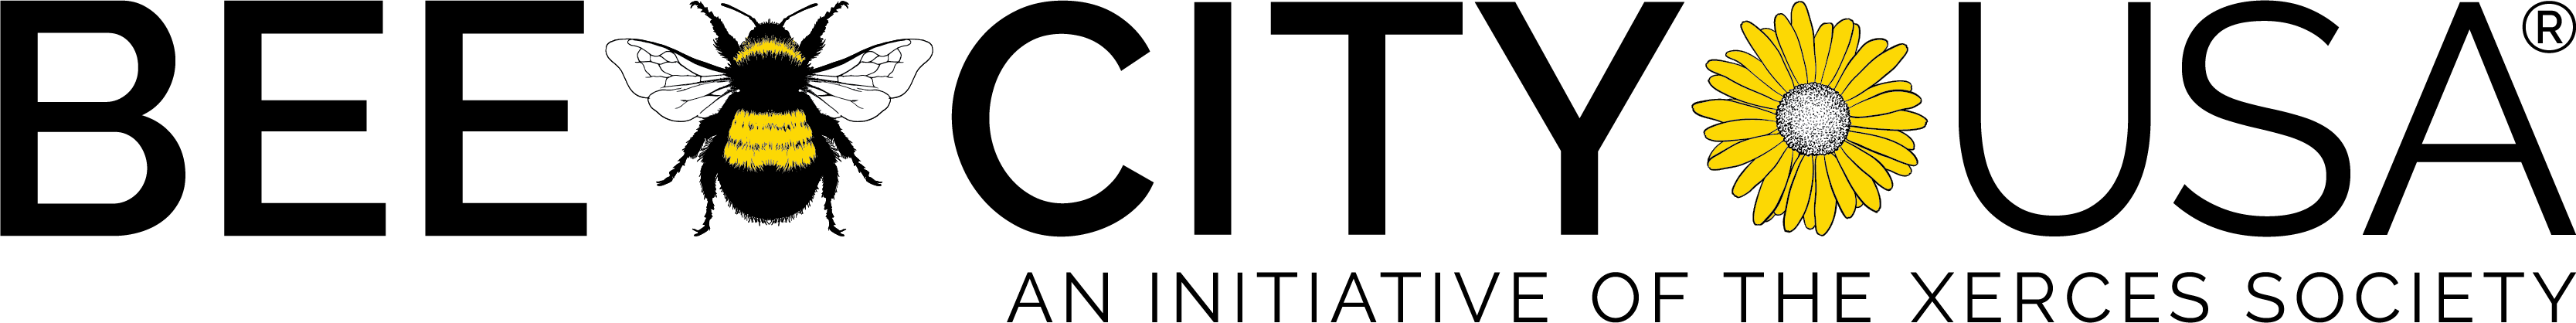 BeeCityUSA_Logo_HORZ-tricolor_MED